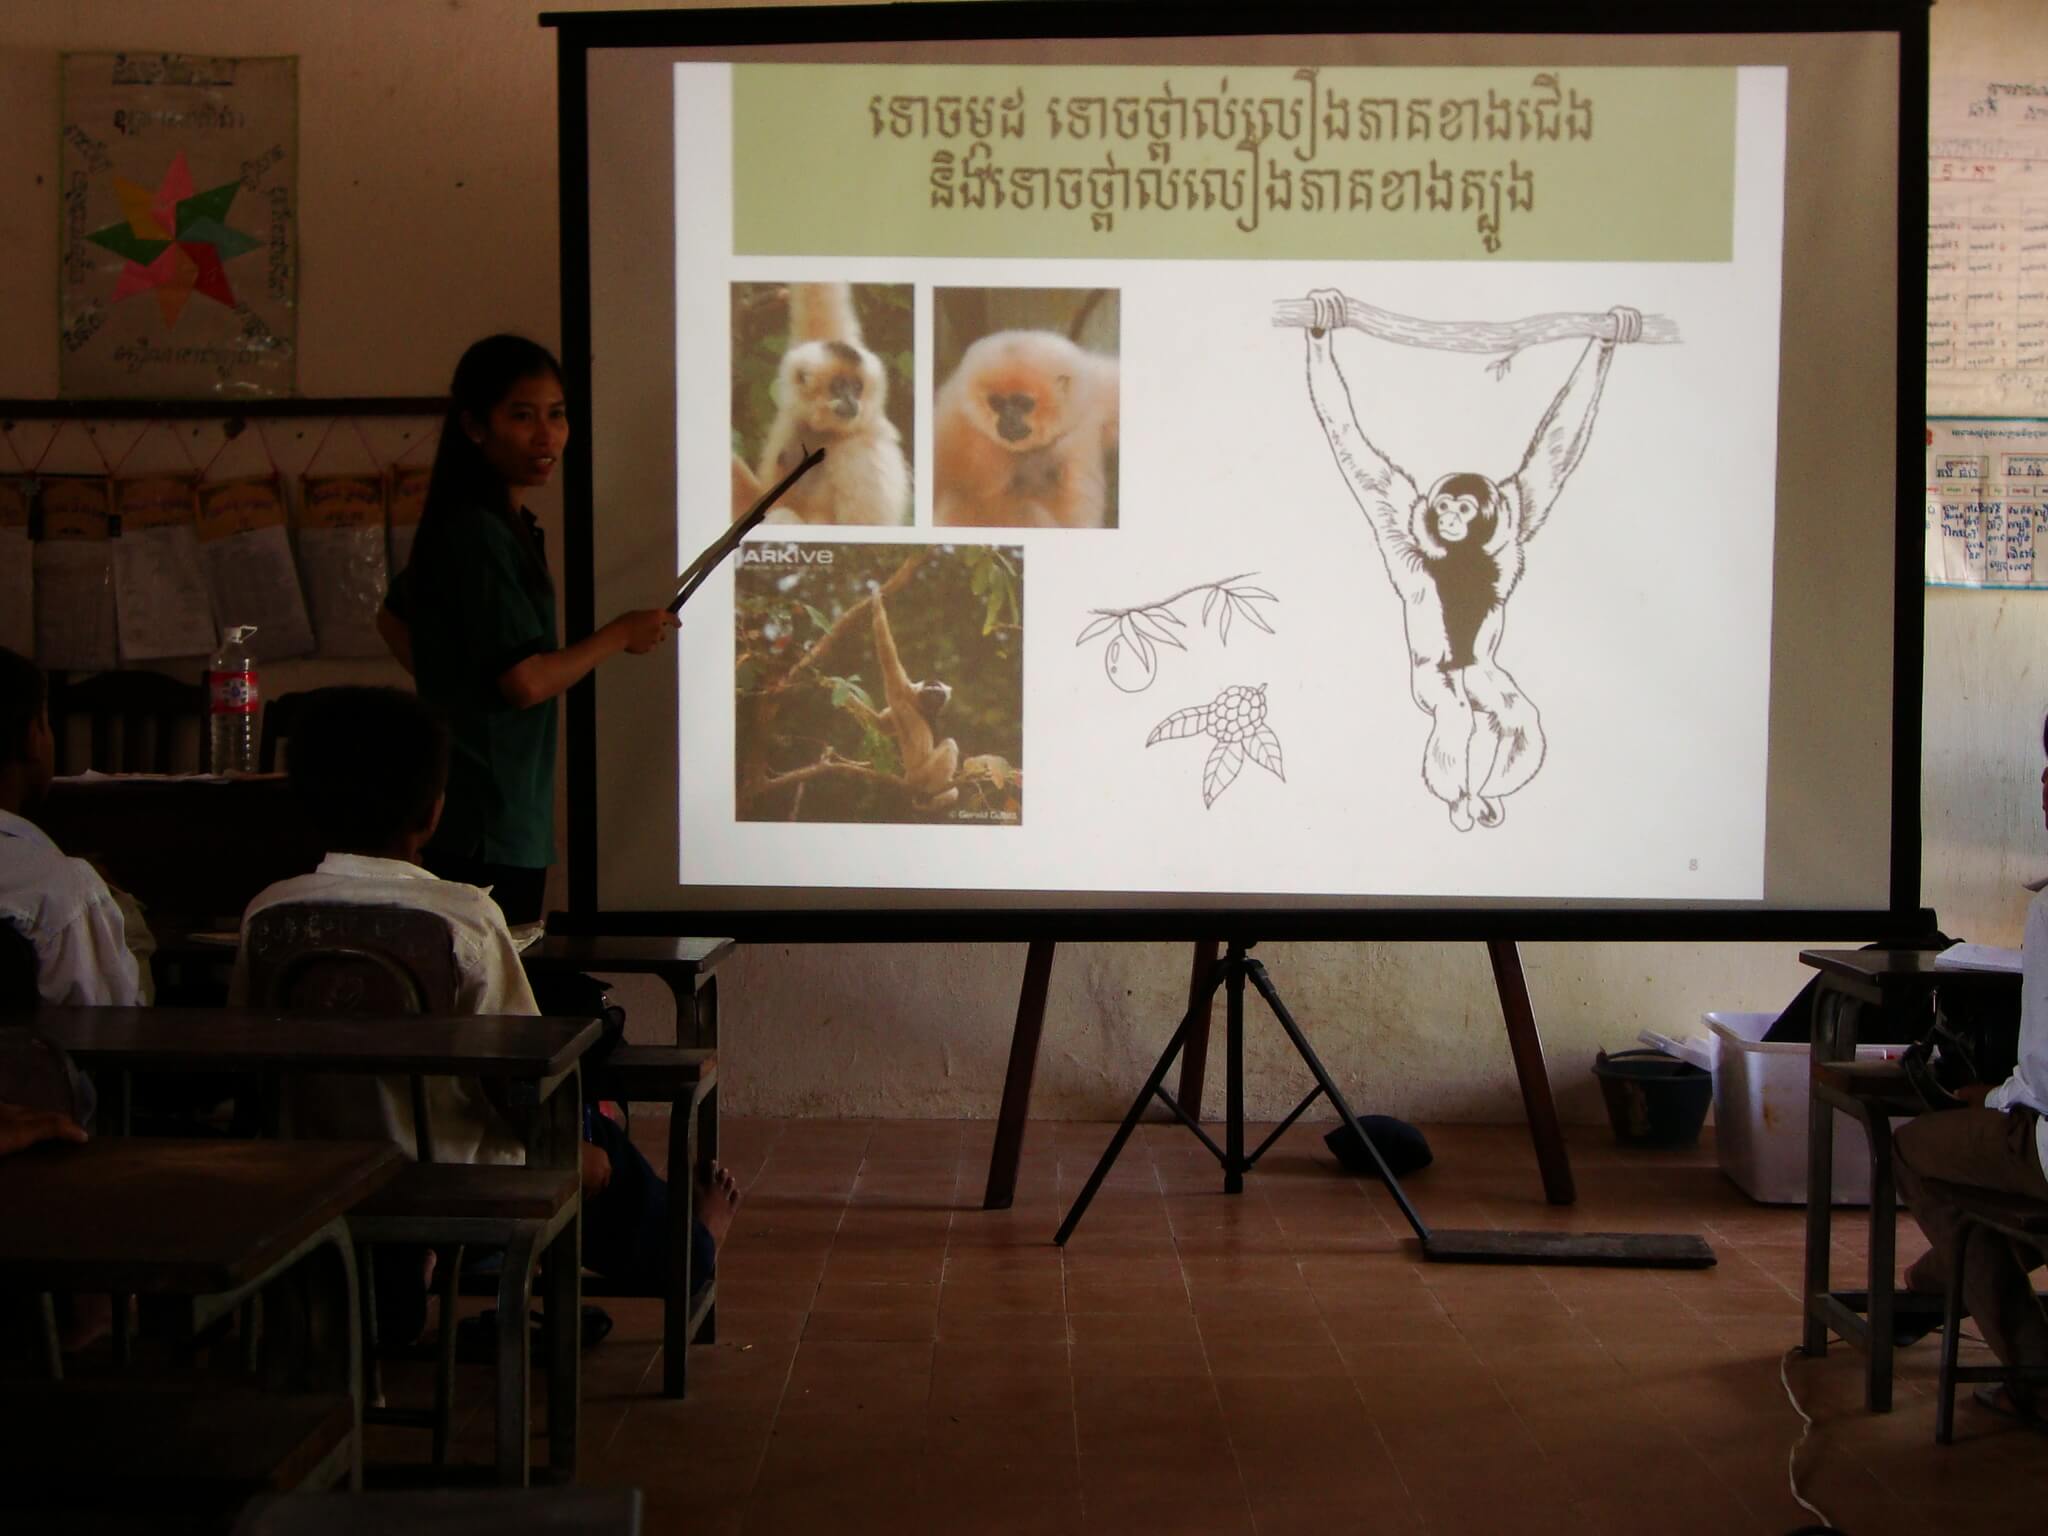 Primate conservation education program - Brenda de Groot